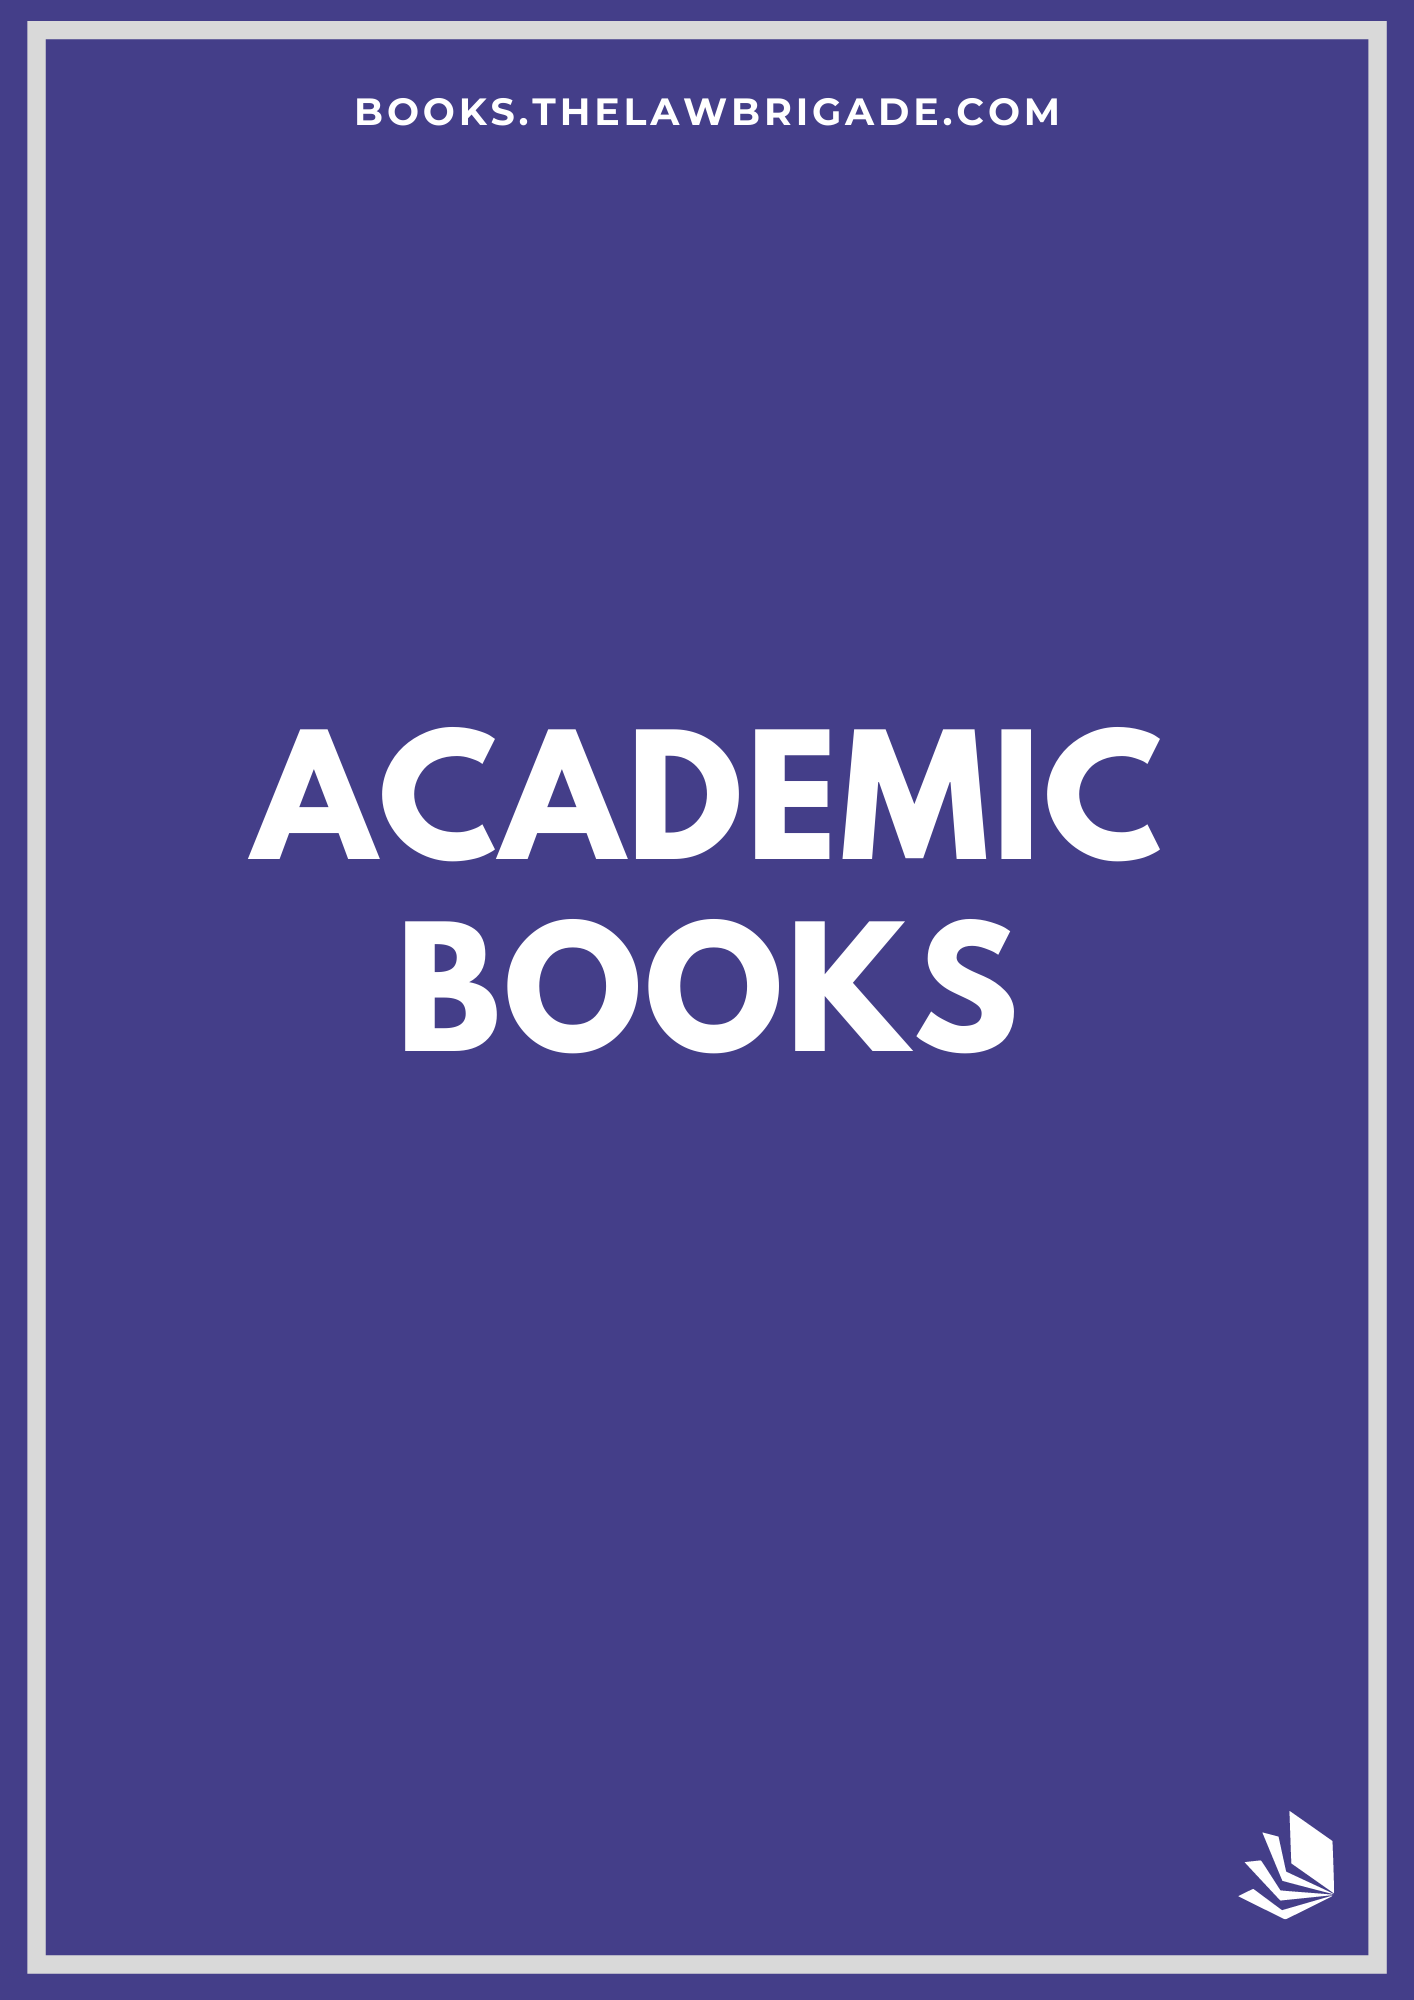 Academic books